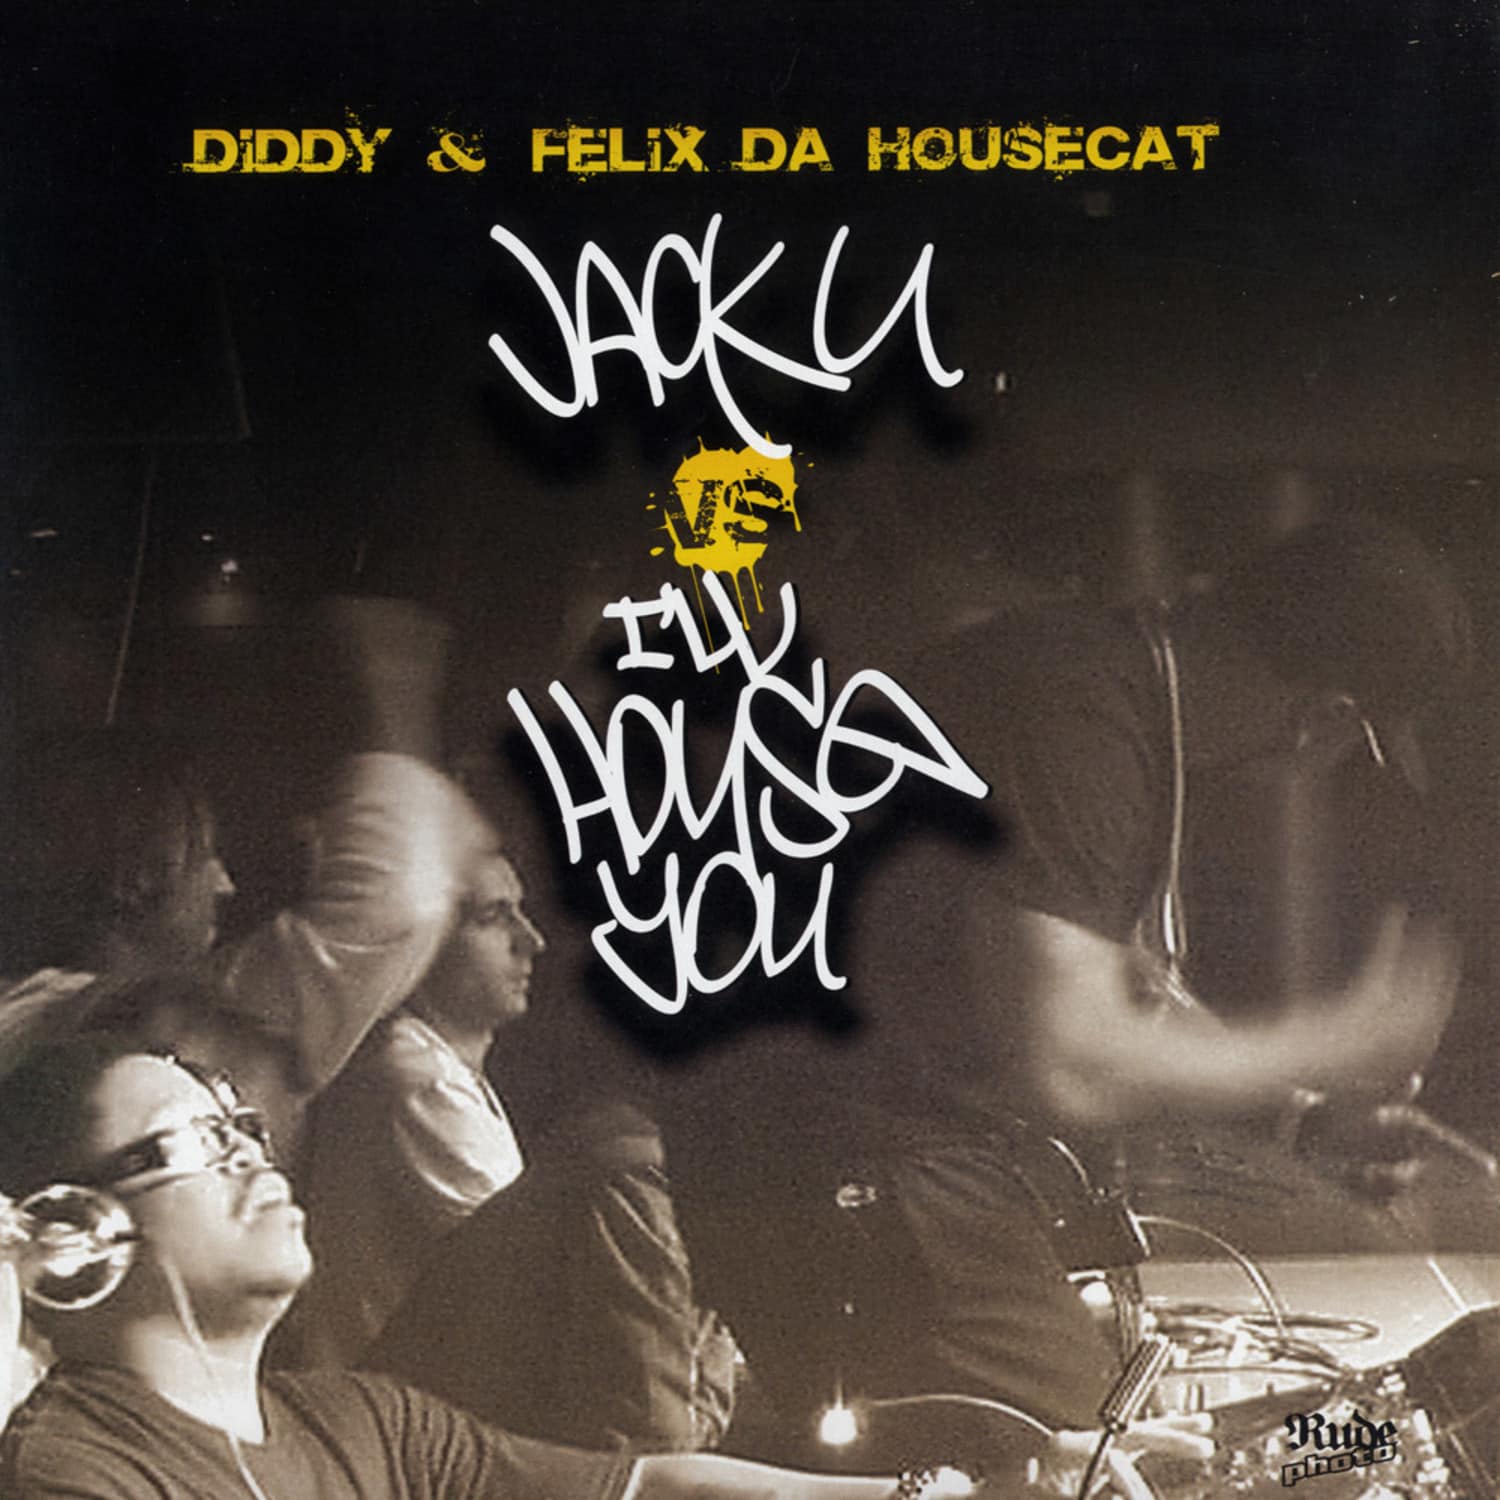 Diddy & Felix da Housecat - JACK U VS ILL HOUSE YOU